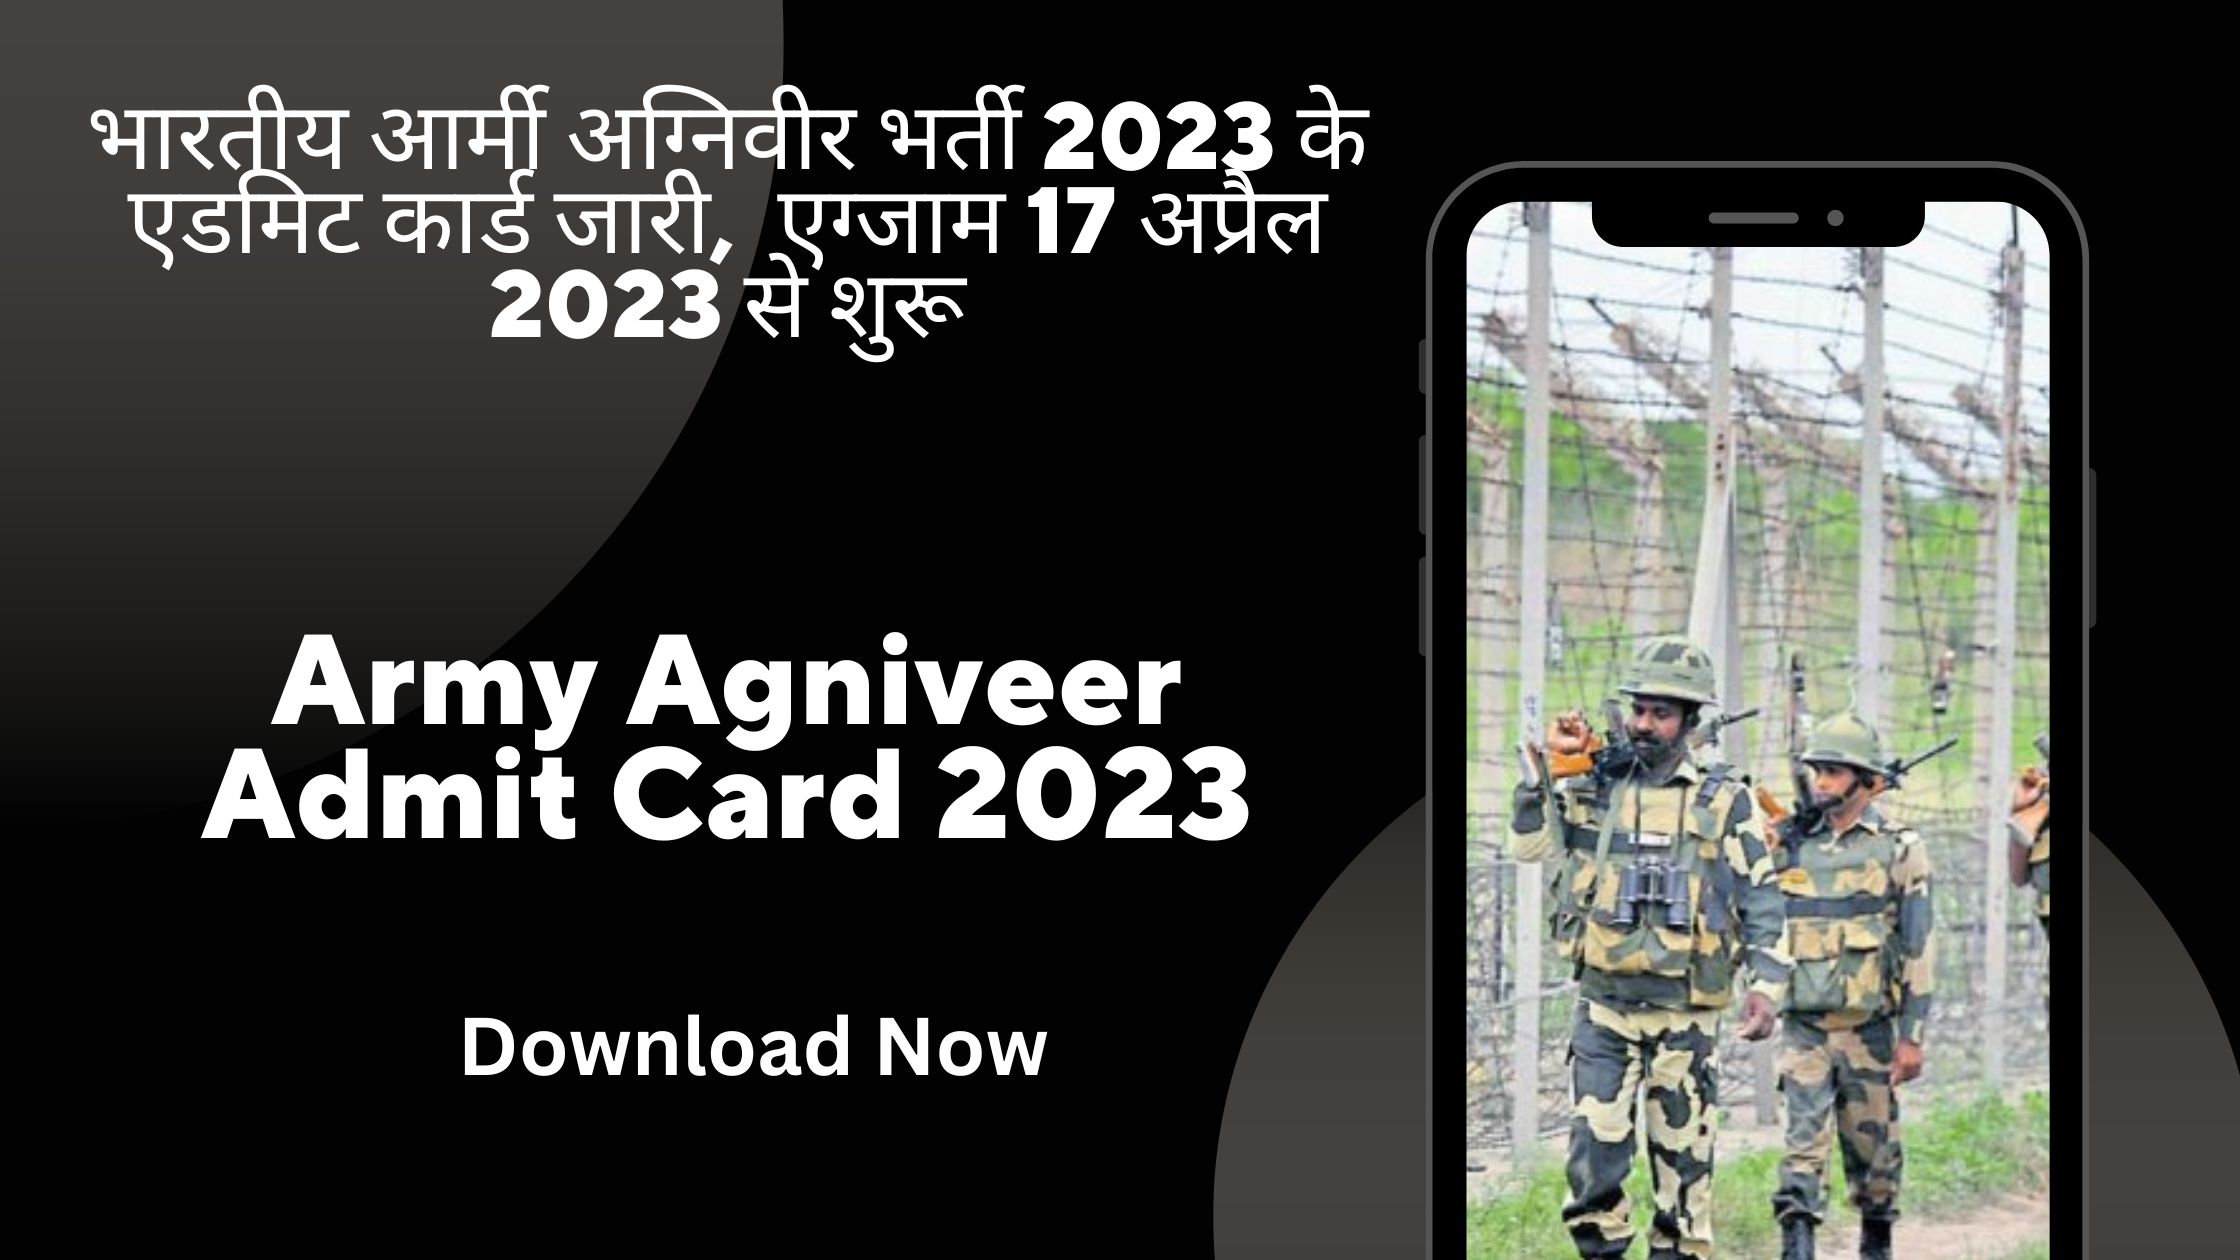 Army Agniveer Admit Card 2023